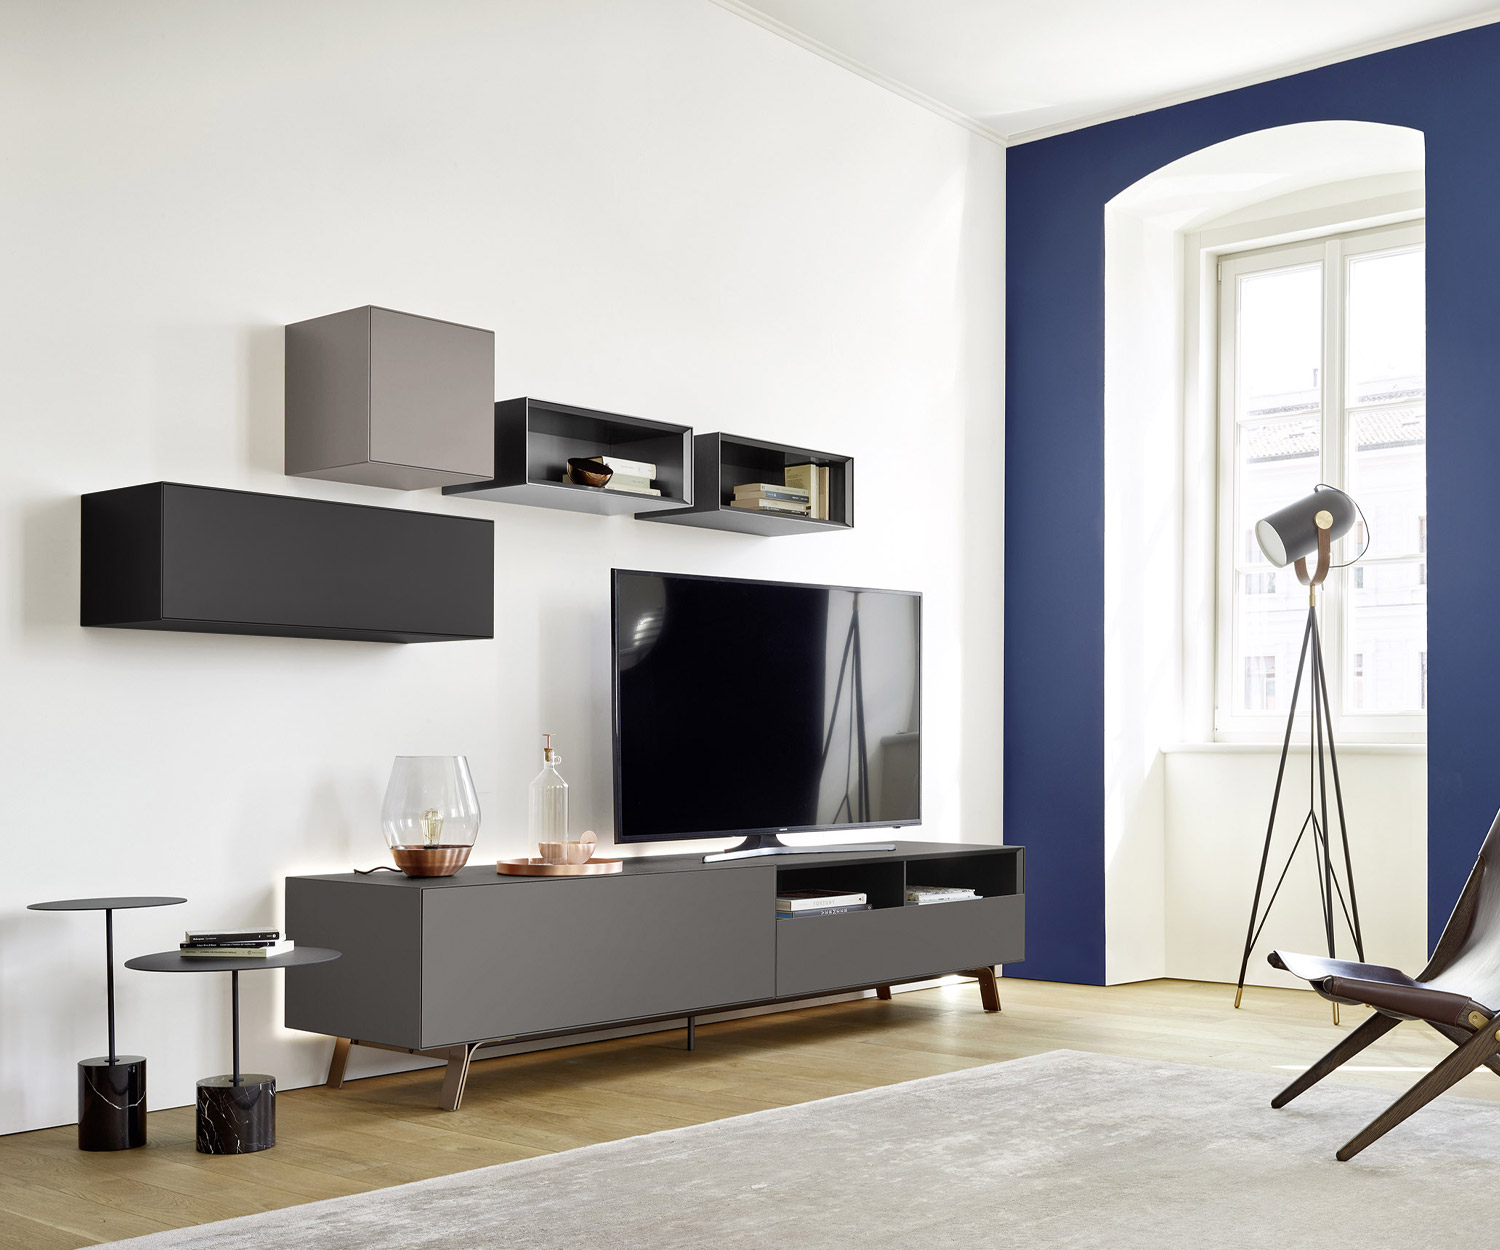 Modern Livitalia design wandmeubel in de woonkamer boven design lowboard met tv-meubel woonkamer